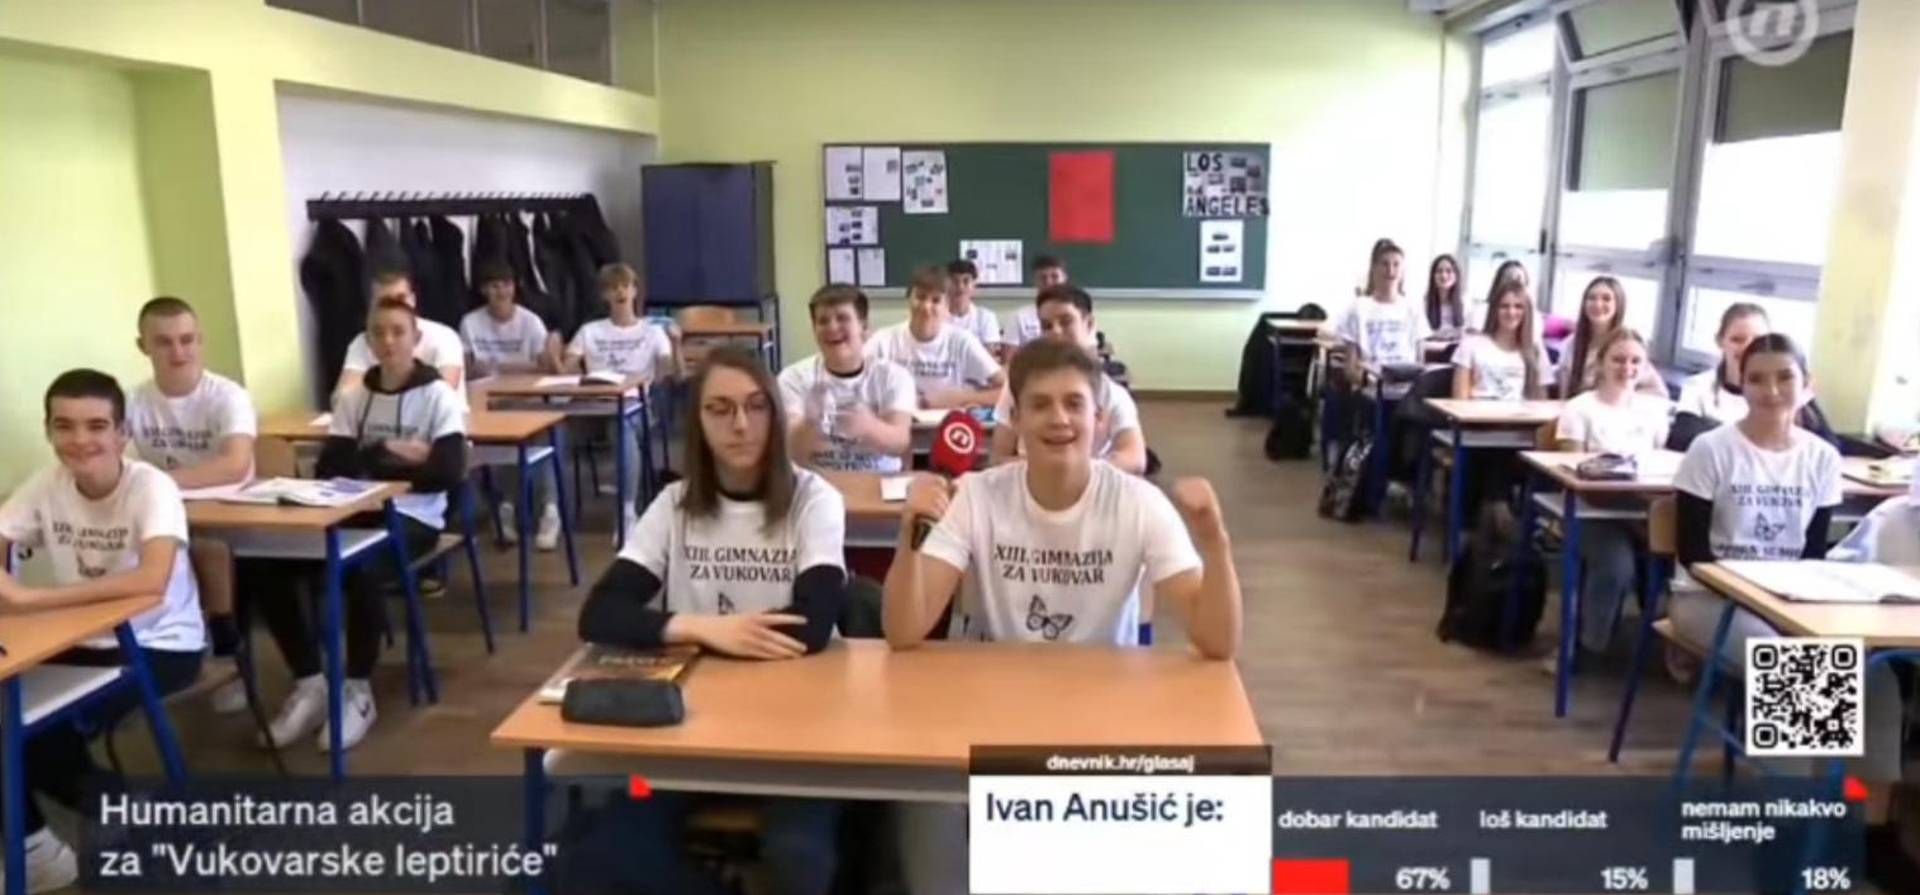 Prekrasna gesta zagrebačkih srednjoškolaca za Vukovarce: Ravnateljica: 'Ponosni smo'